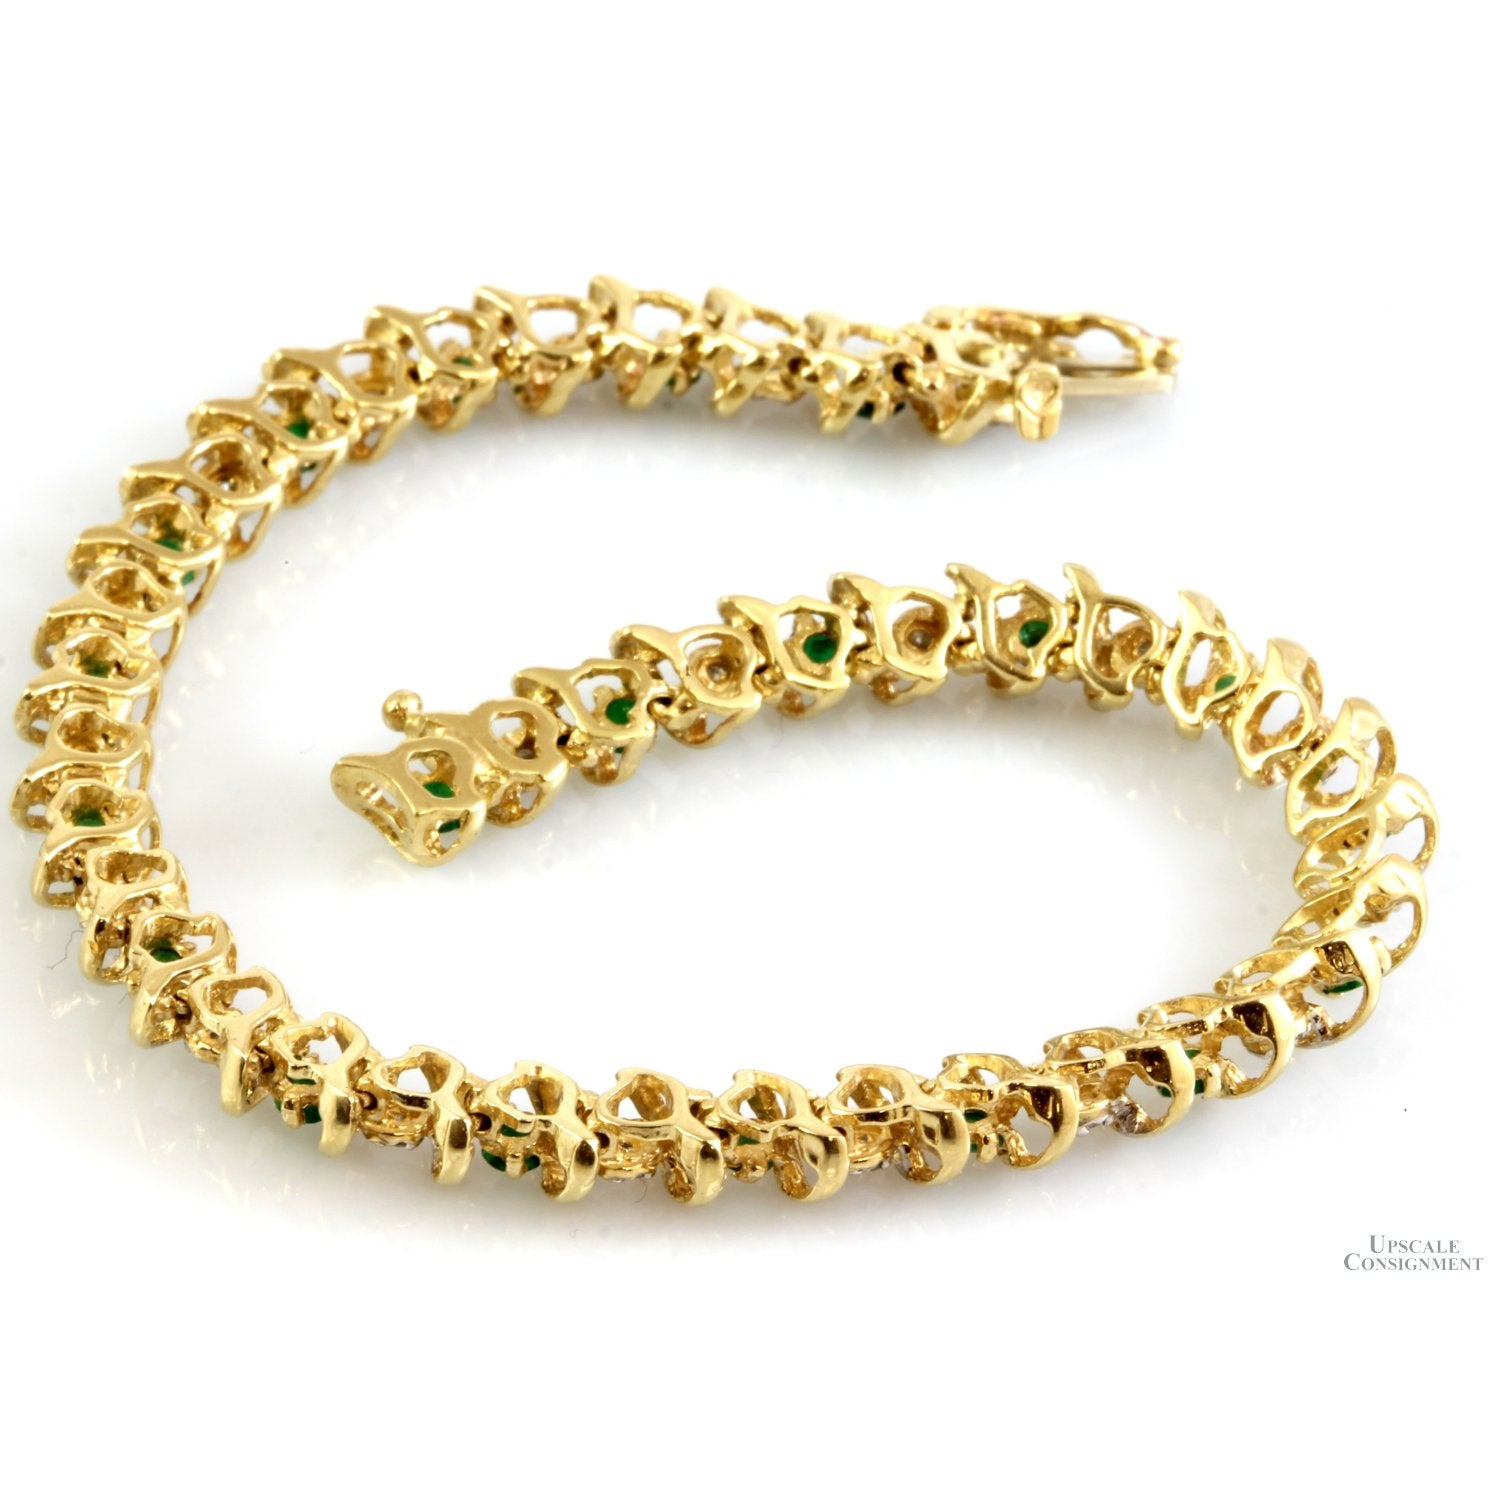 7 Inch Solid 10K Gold Herringbone Chain Bracelet - JCPenney